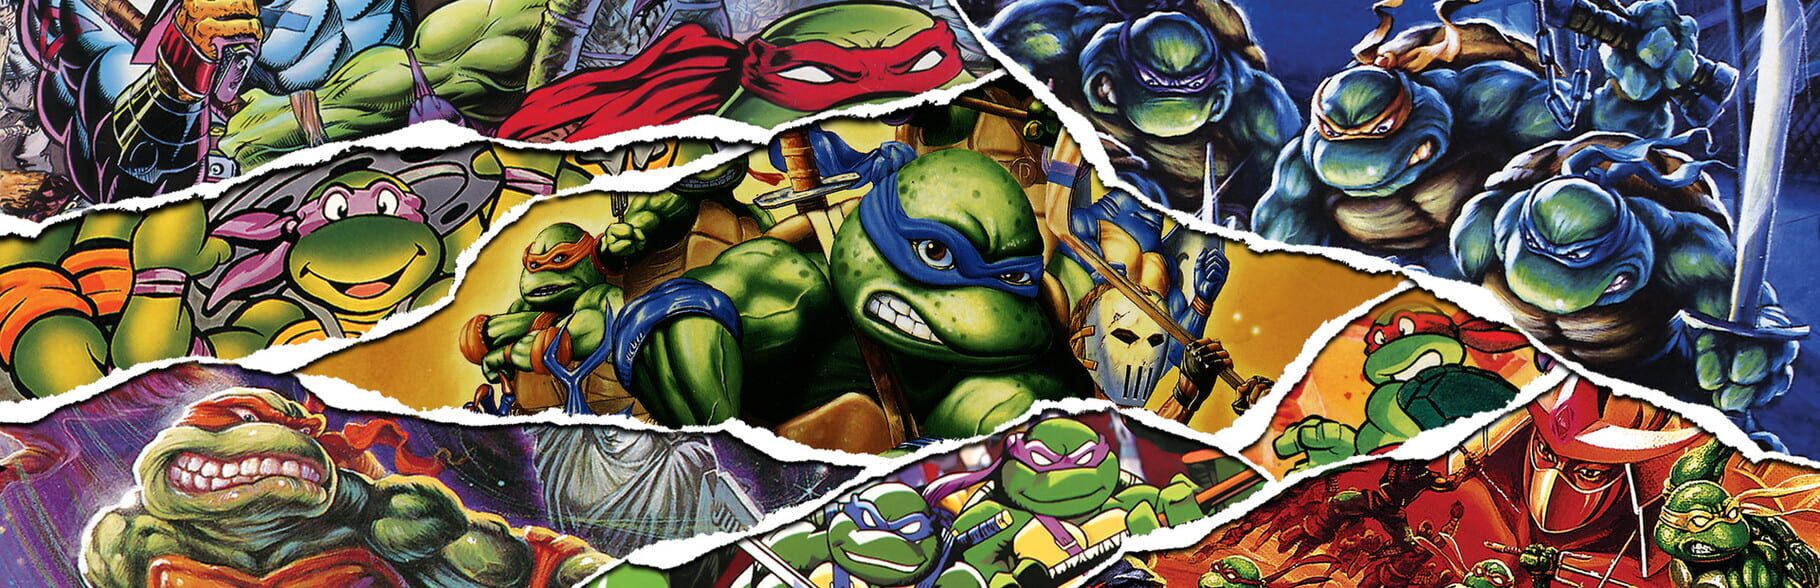 Artwork for Teenage Mutant Ninja Turtles: The Cowabunga Collection